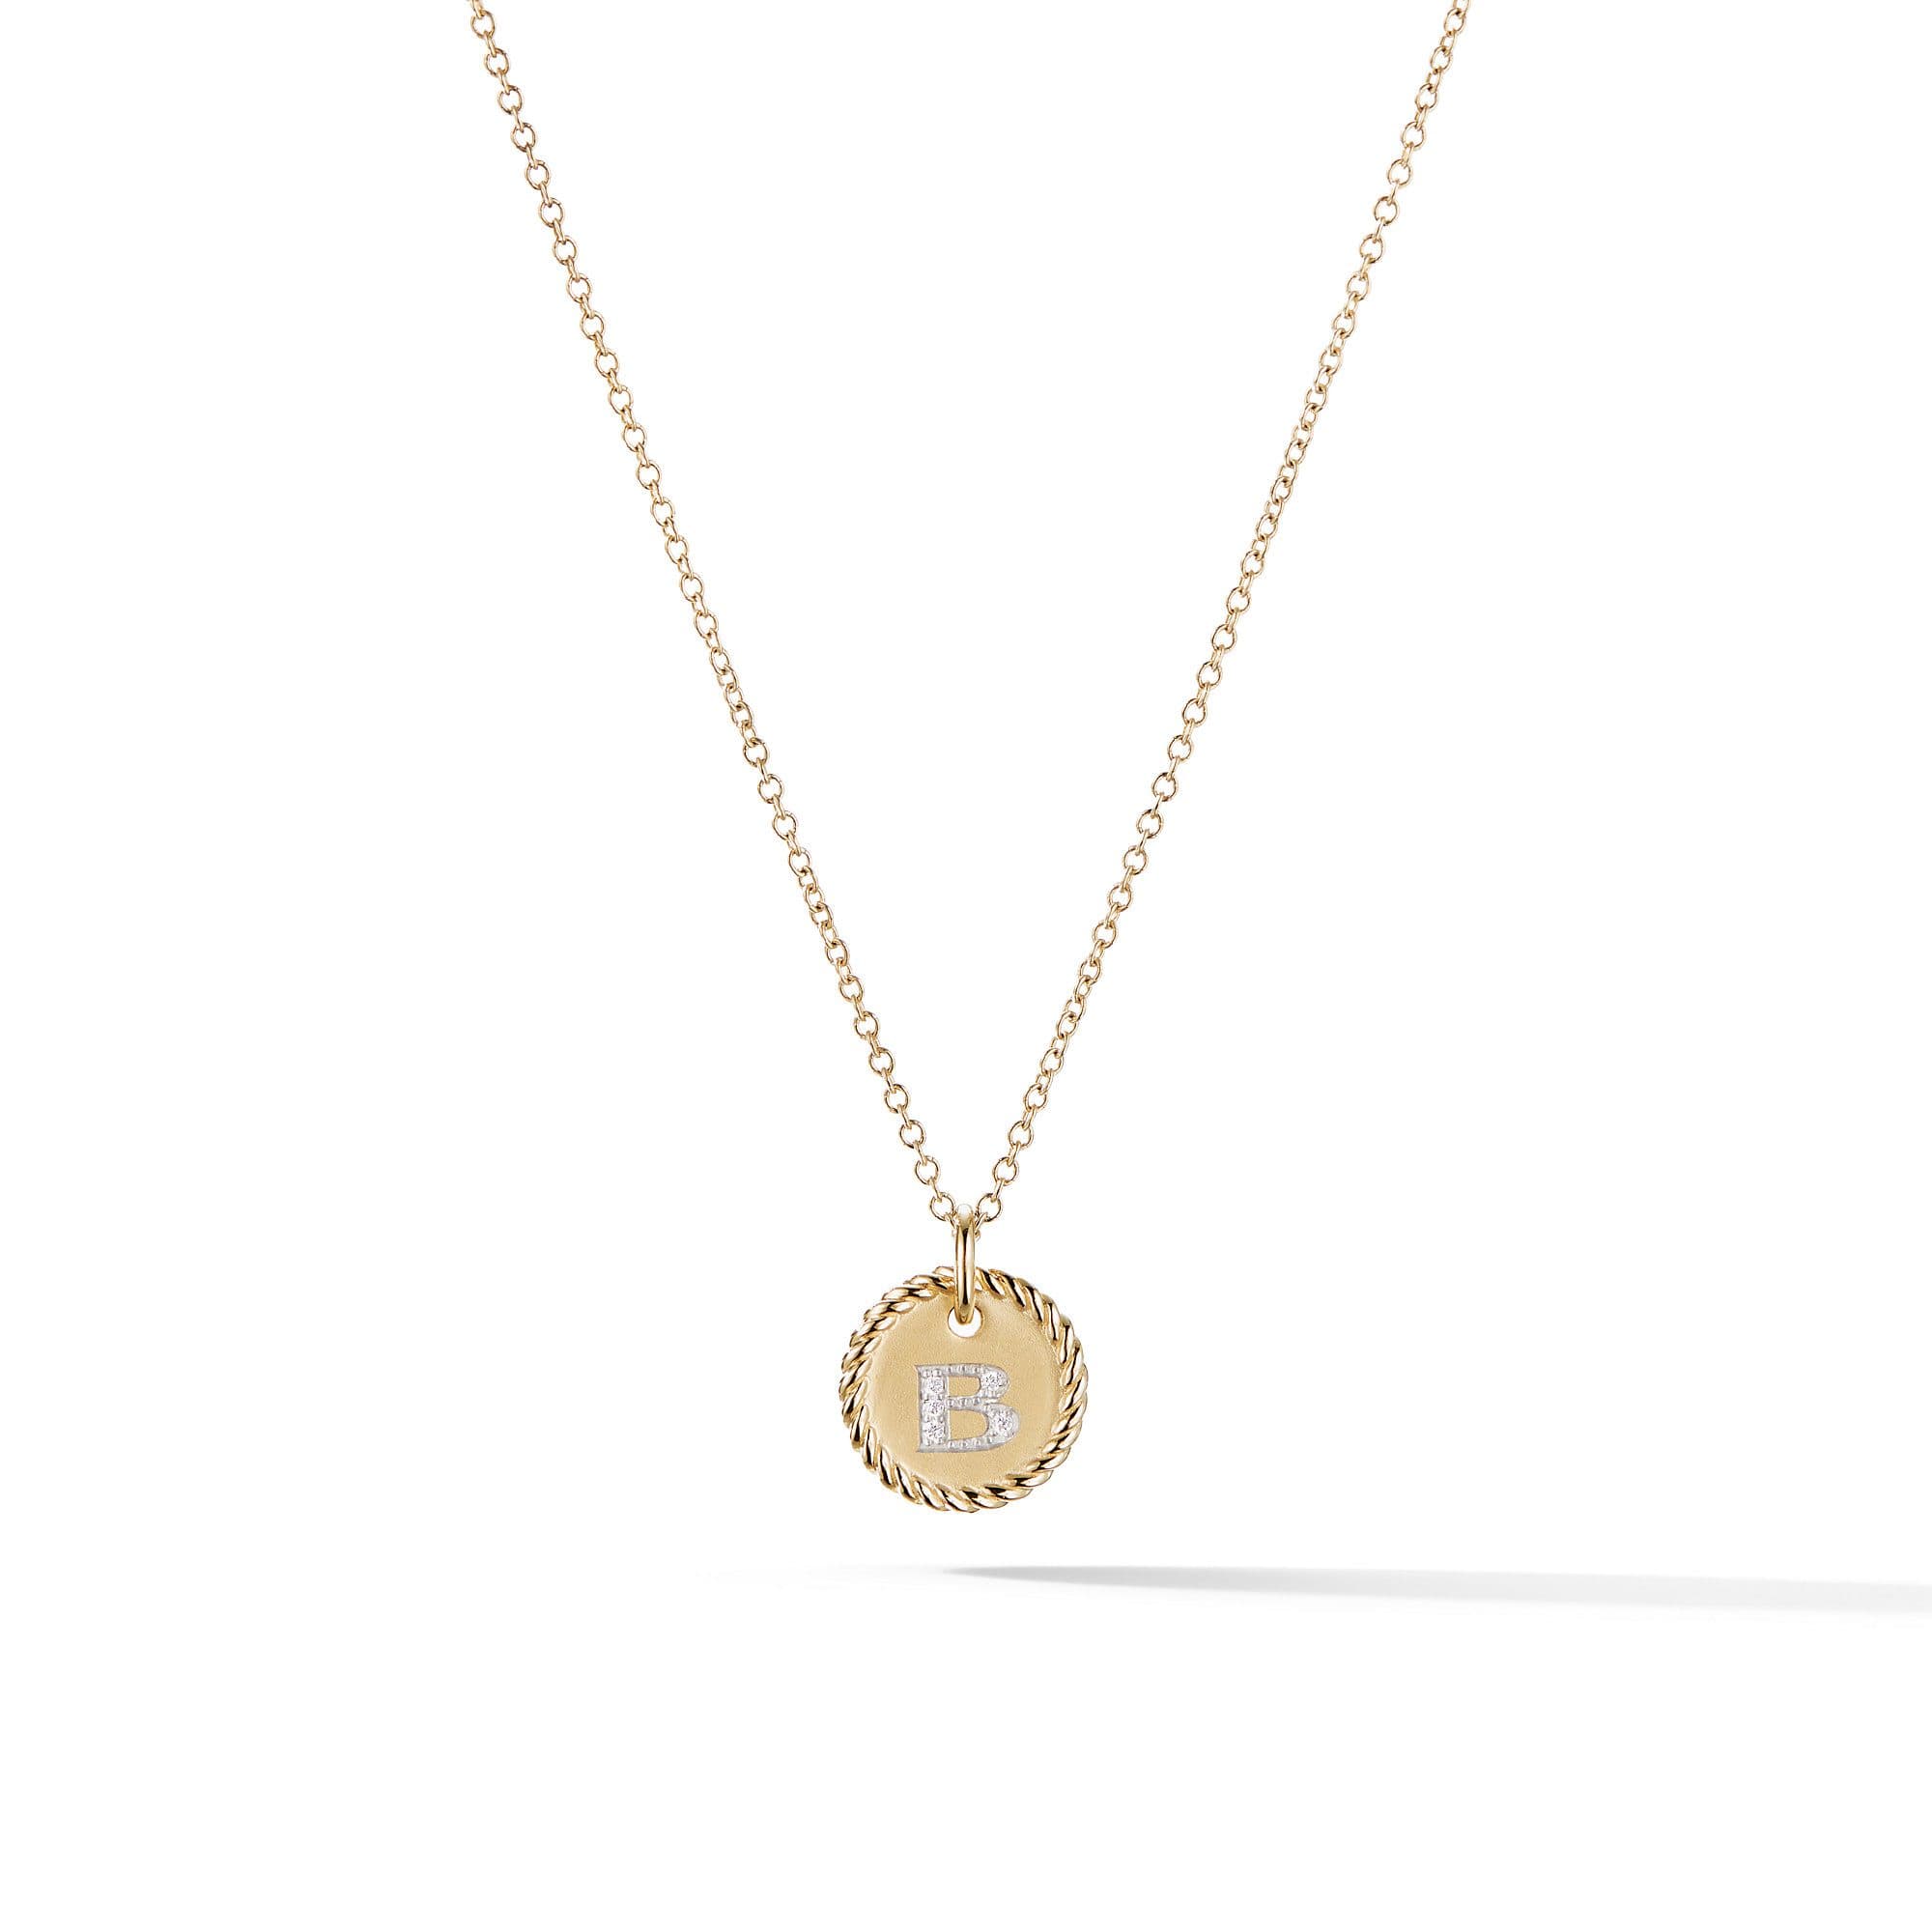 David Yurman B Initial Charm Necklace in 18k Yellow Gold with Diamonds